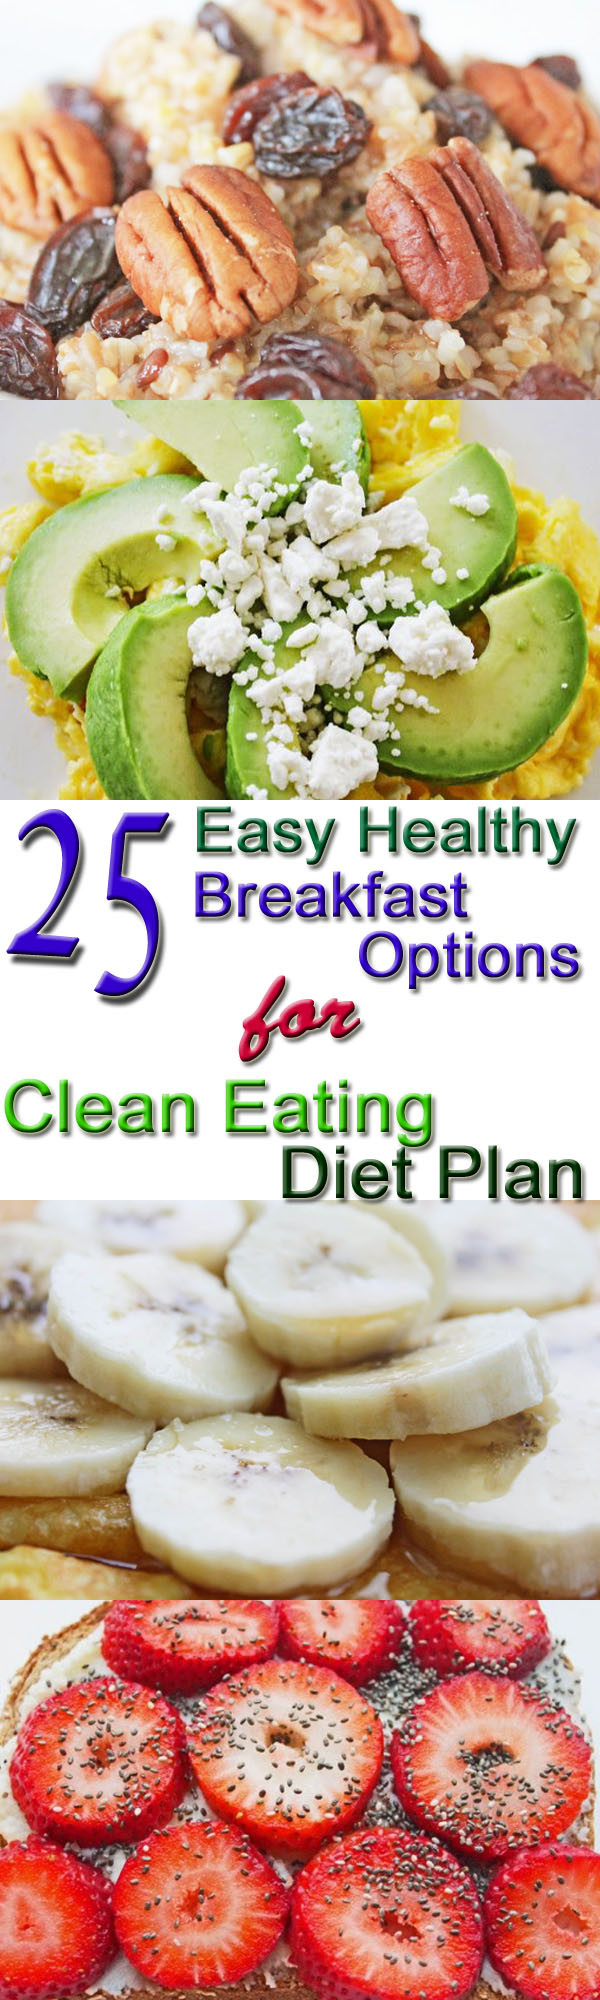 Clean Eating Breakfast Ideas
 25 Healthy Breakfast Options